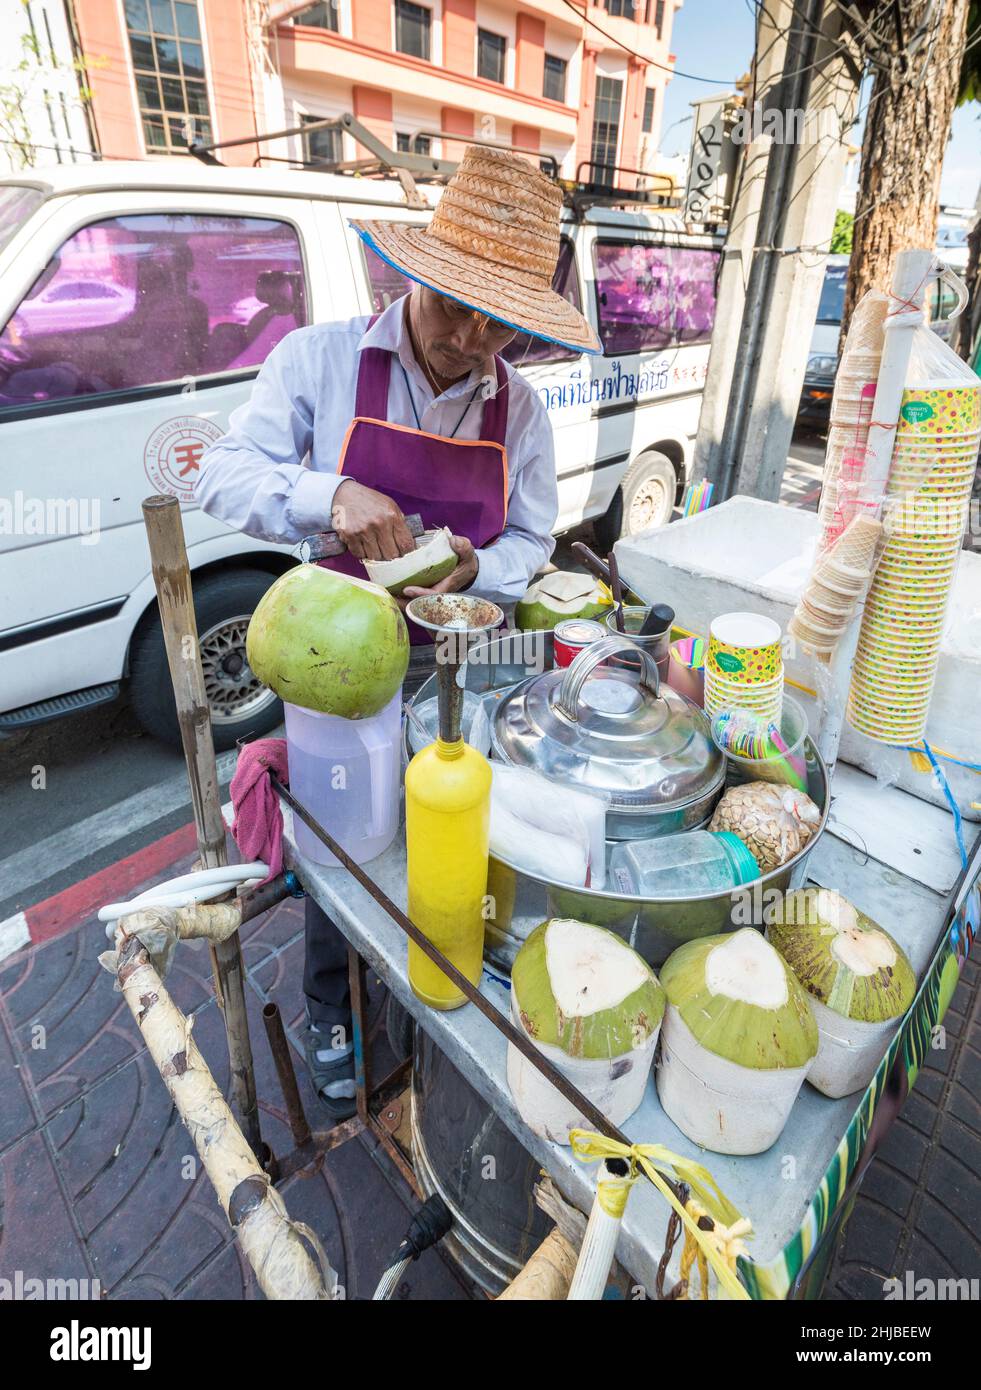 Vendita di cocco fresco e bevande in strada, Bangkok, Thailandia Foto Stock